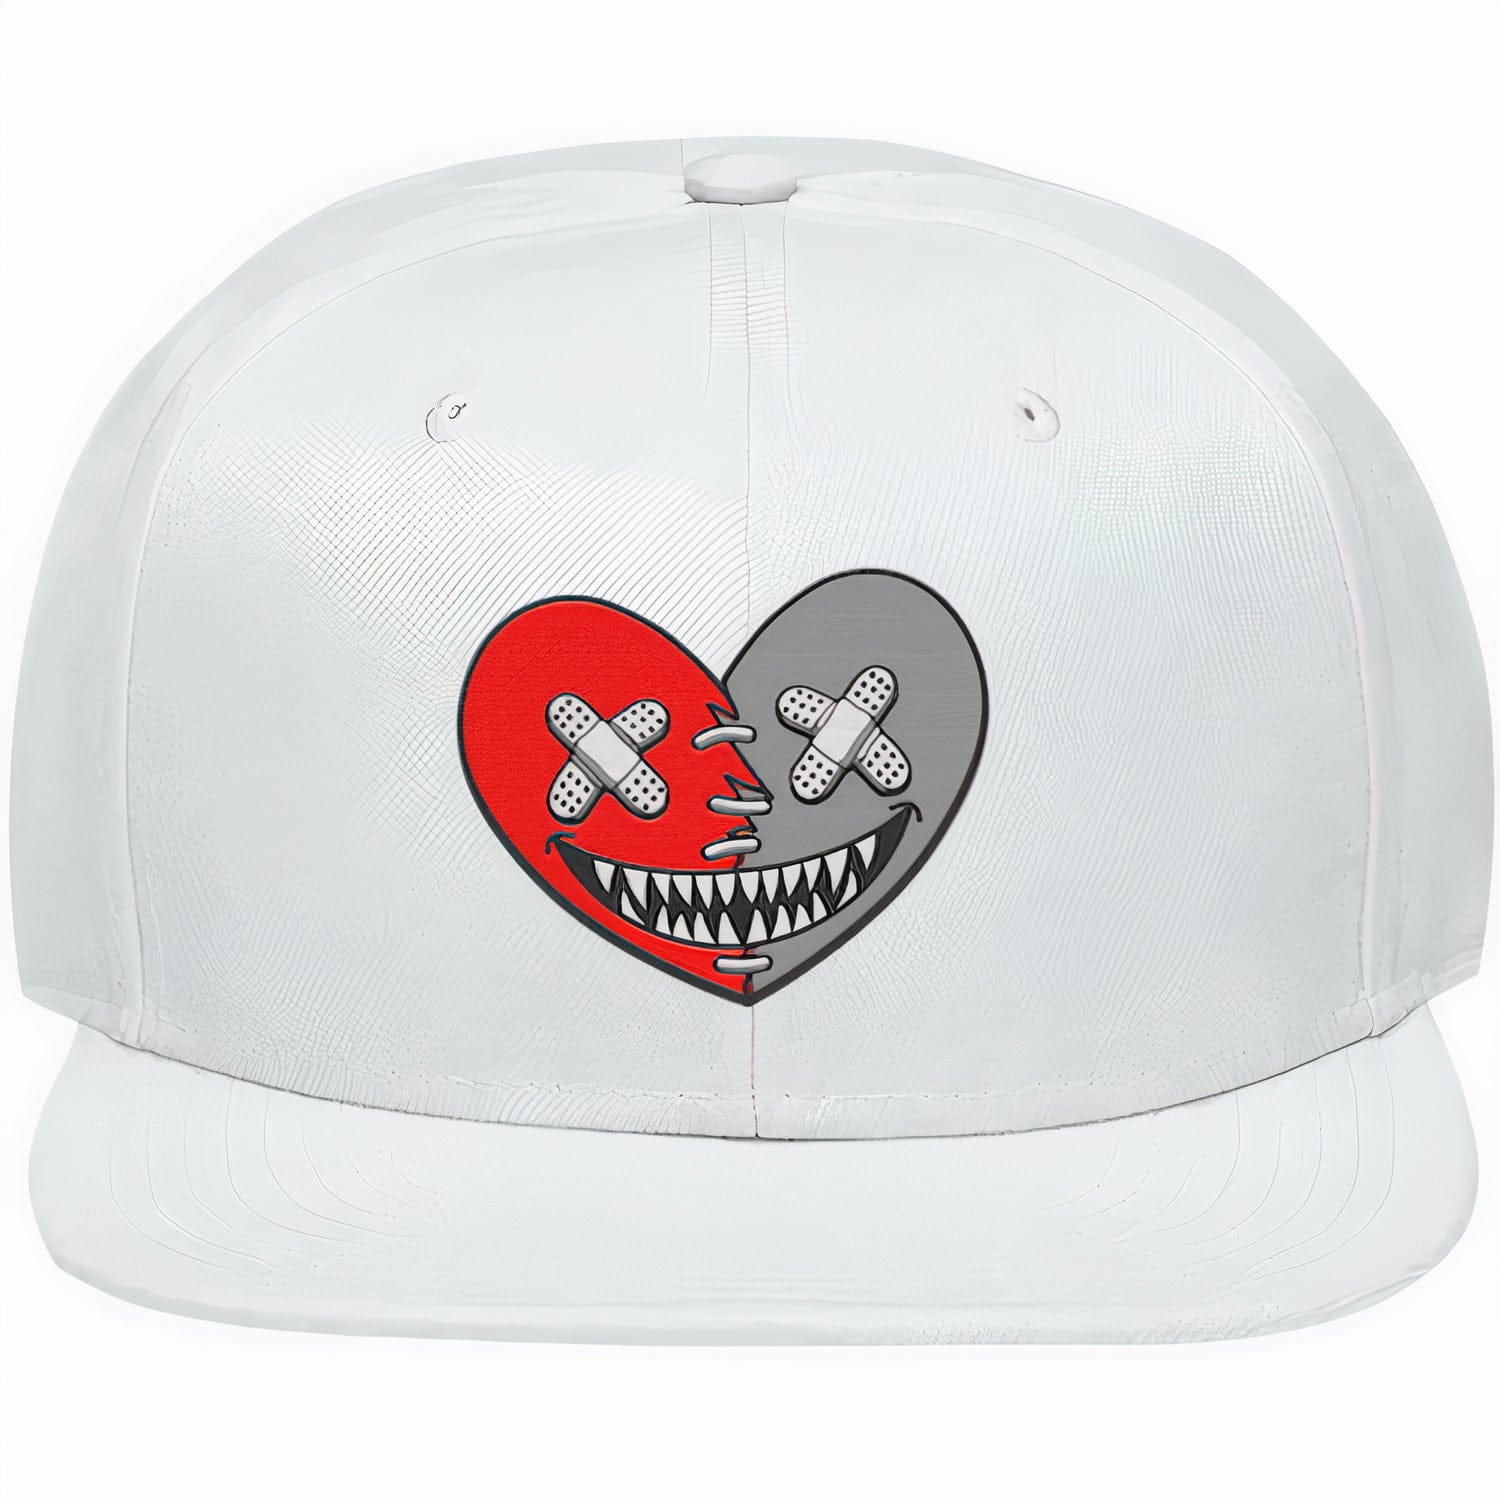 Cherry 12s Snapback Hat - Jordan 12 Cherry Hats - Heart